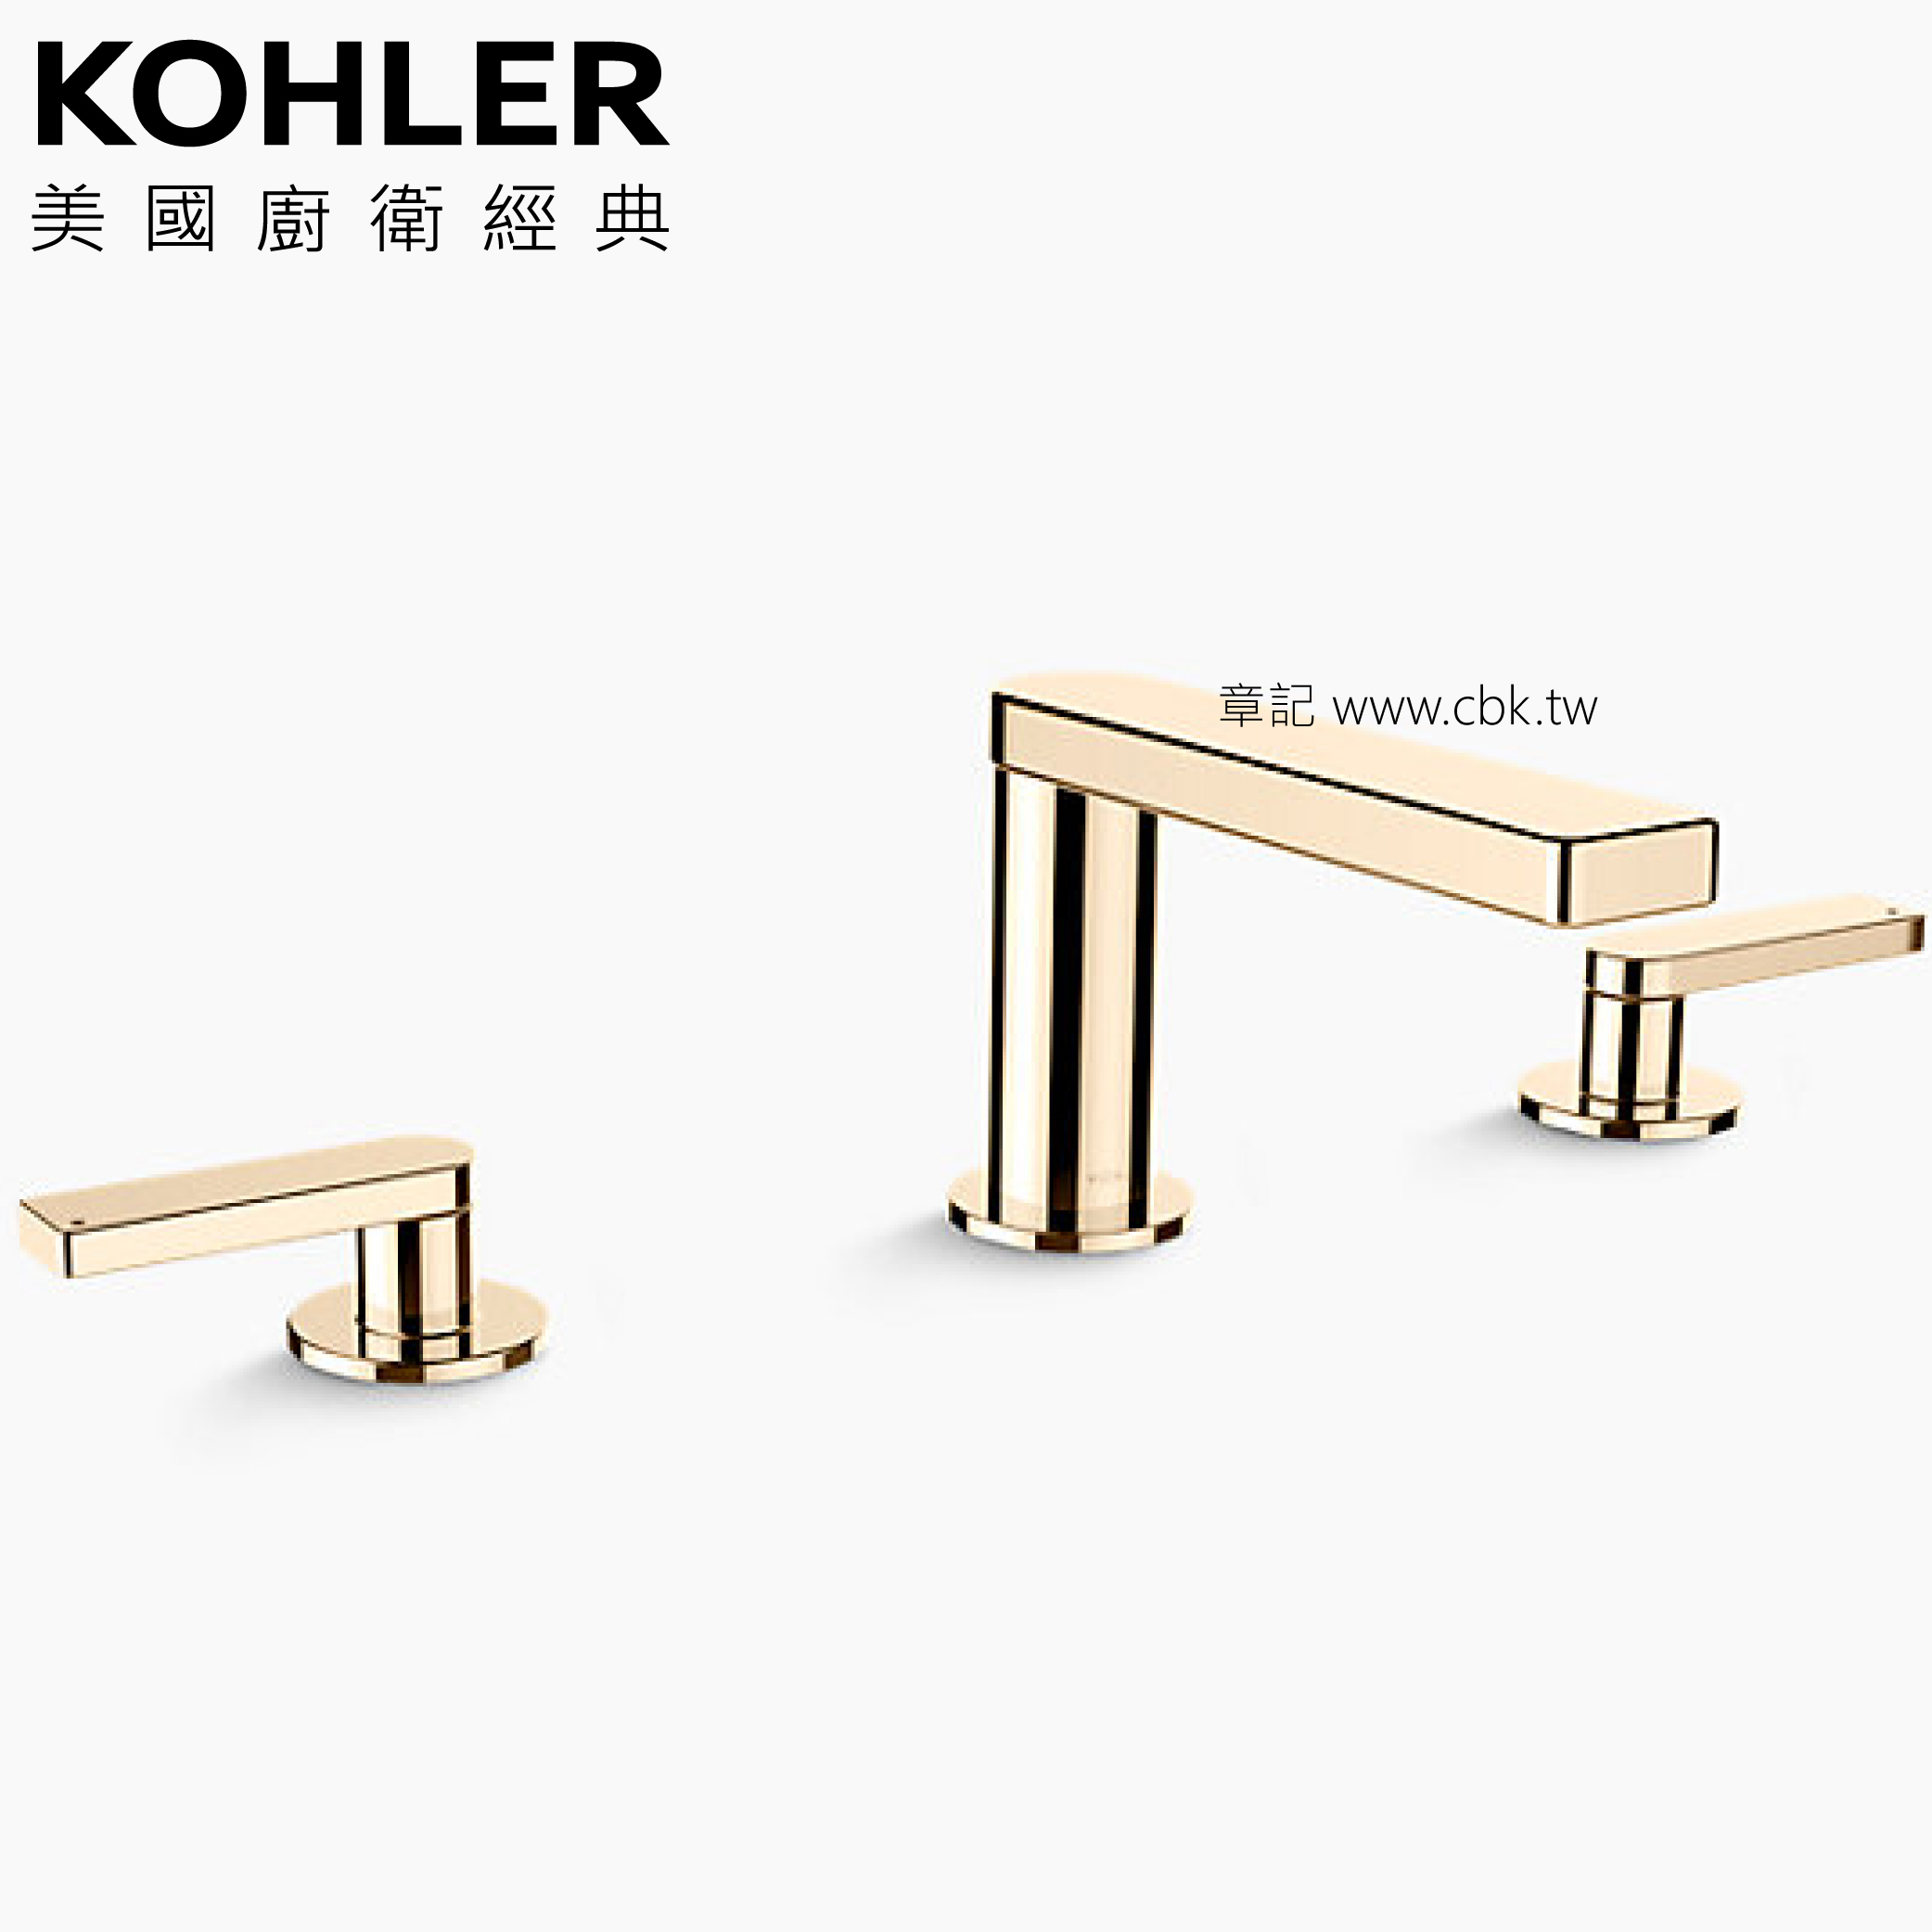 KOHLER Composed 三件式臉盆龍頭(法蘭金) K-73060T-4-AF  |面盆 . 浴櫃|面盆龍頭